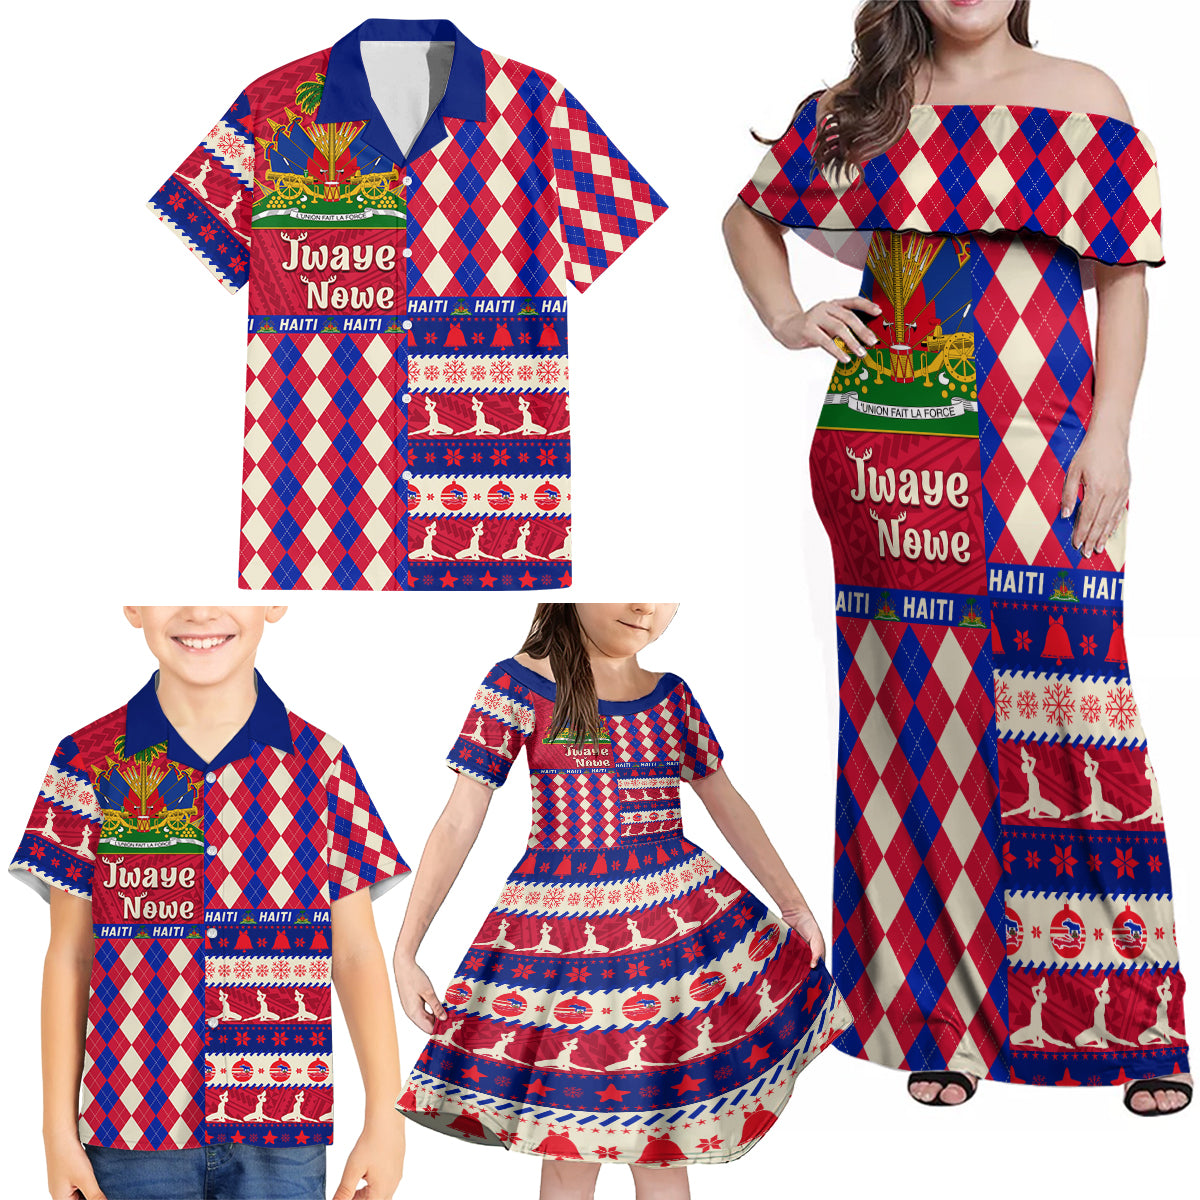 haiti-christmas-family-matching-off-shoulder-maxi-dress-and-hawaiian-shirt-jwaye-nowe-2023-with-coat-of-arms